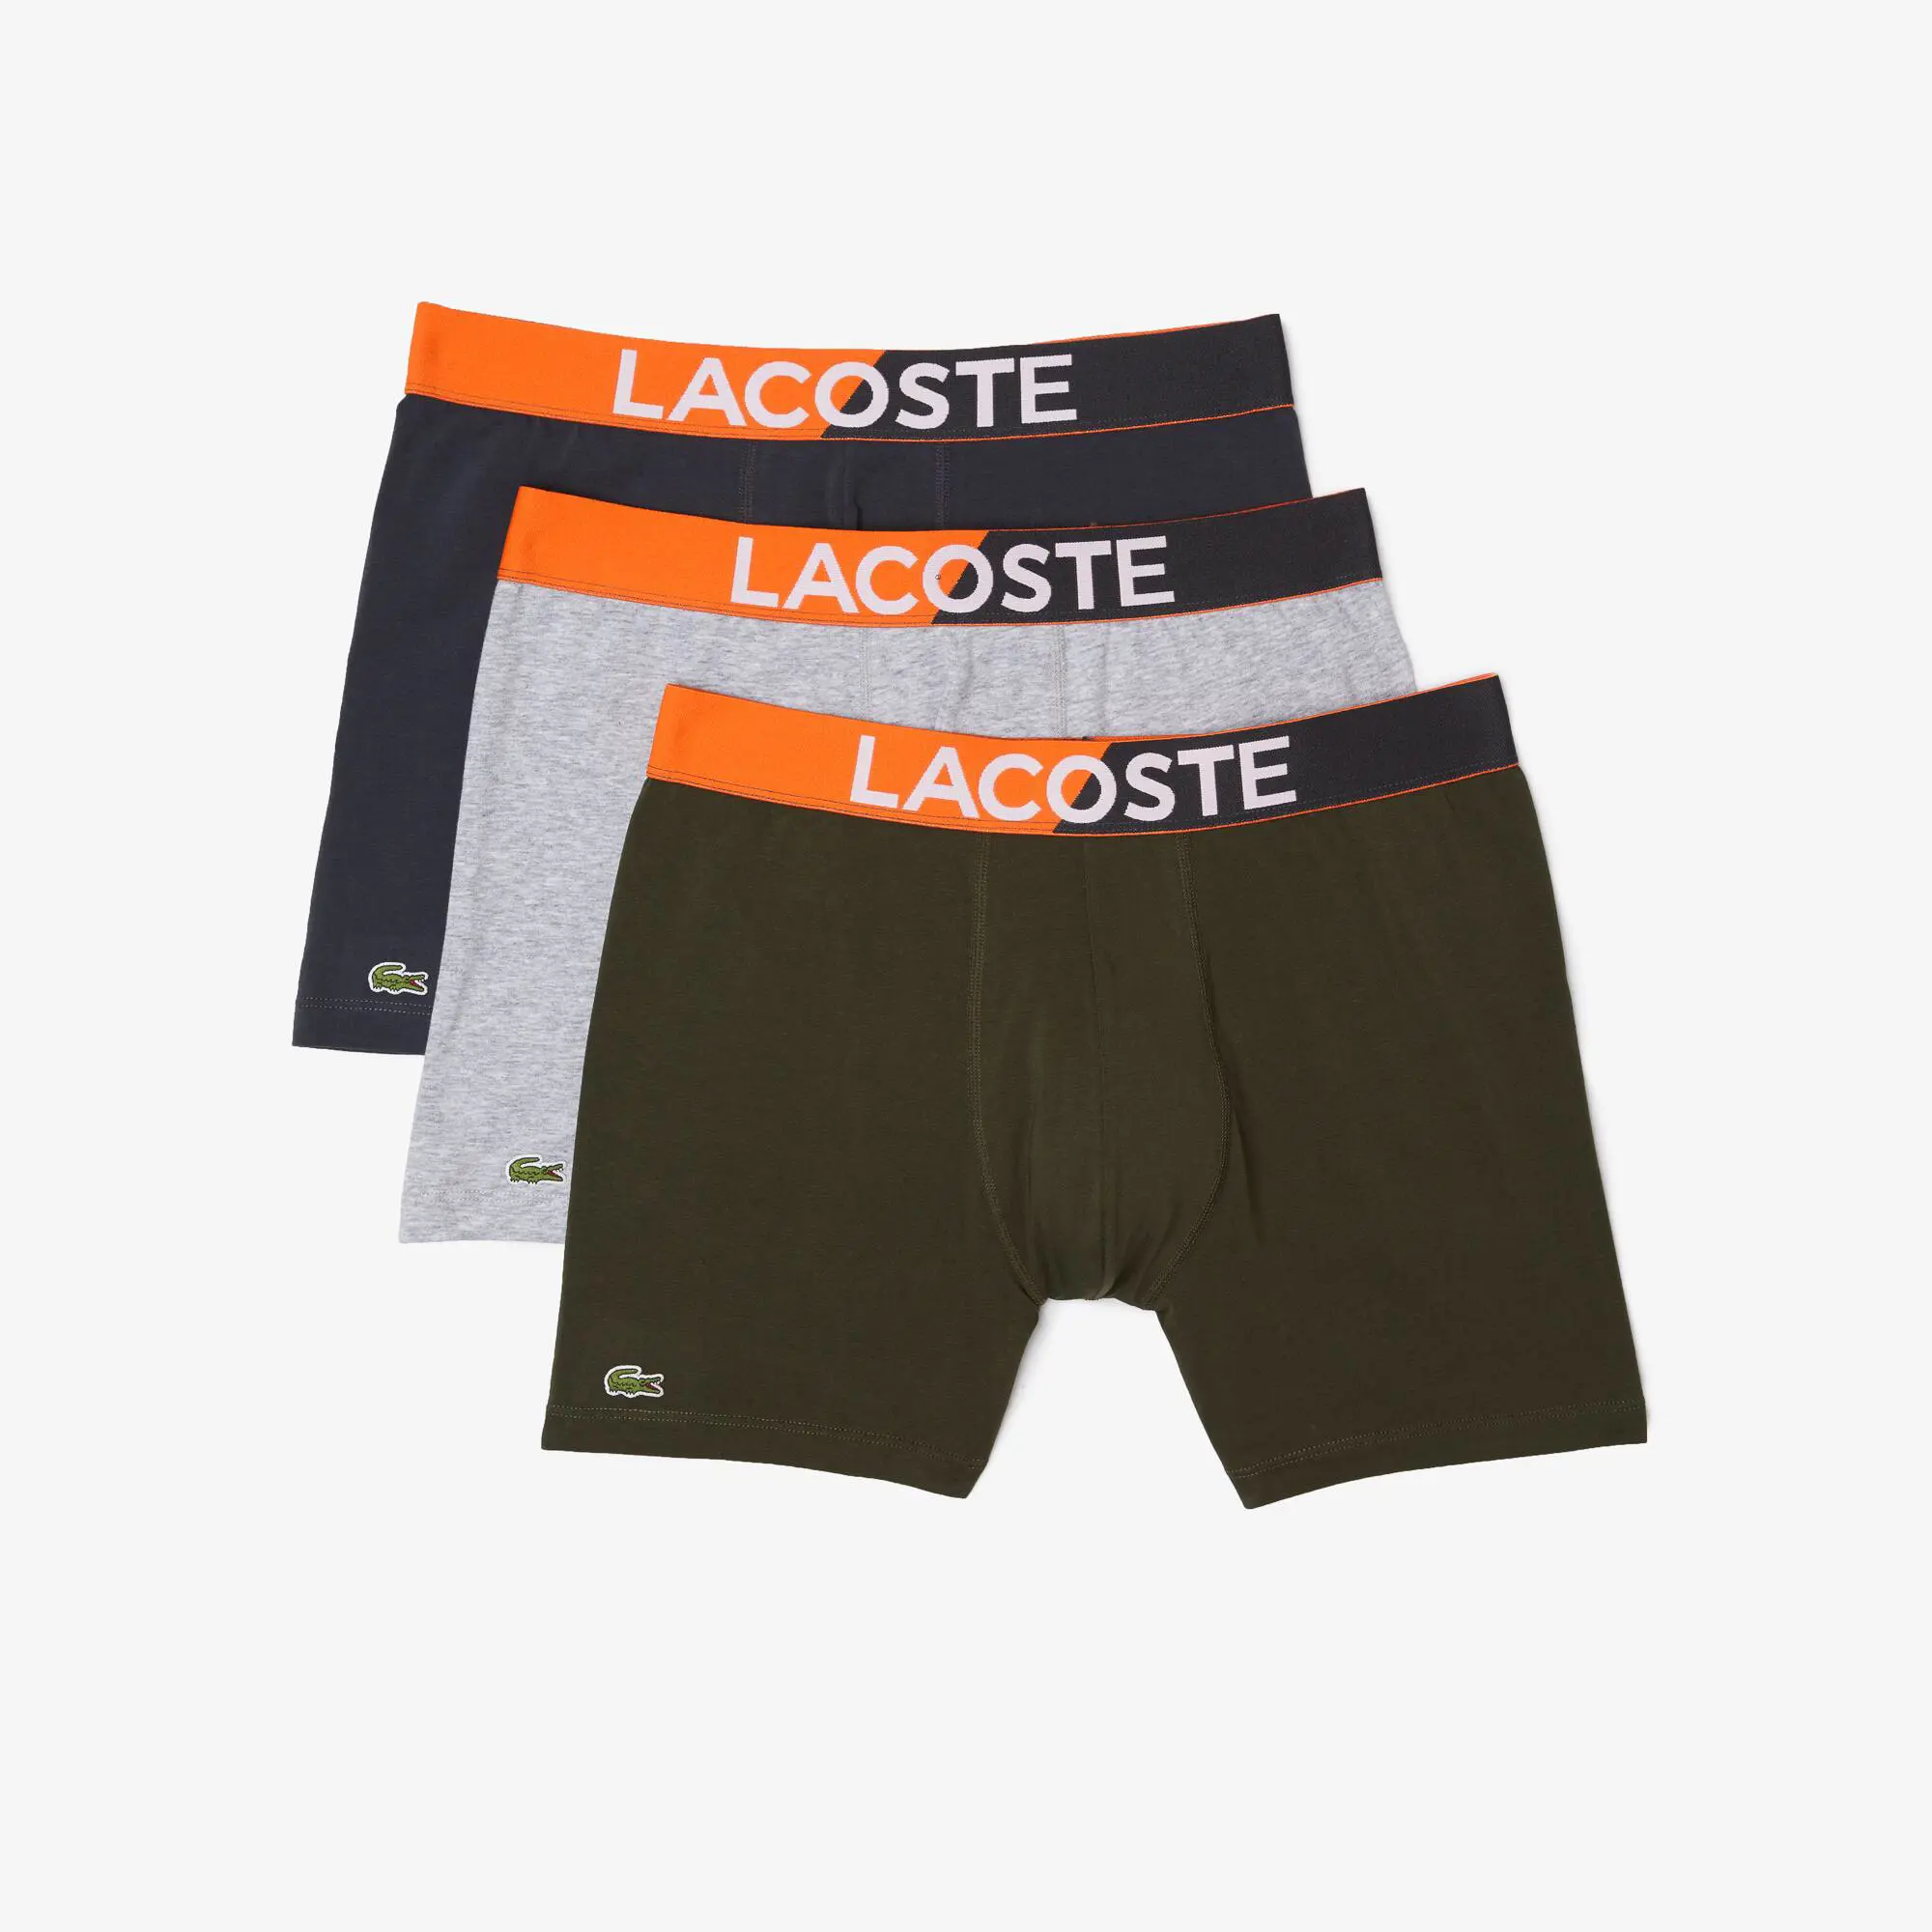 Lacoste Men’s Branded Waist Boxer Brief Three-Pack. 2